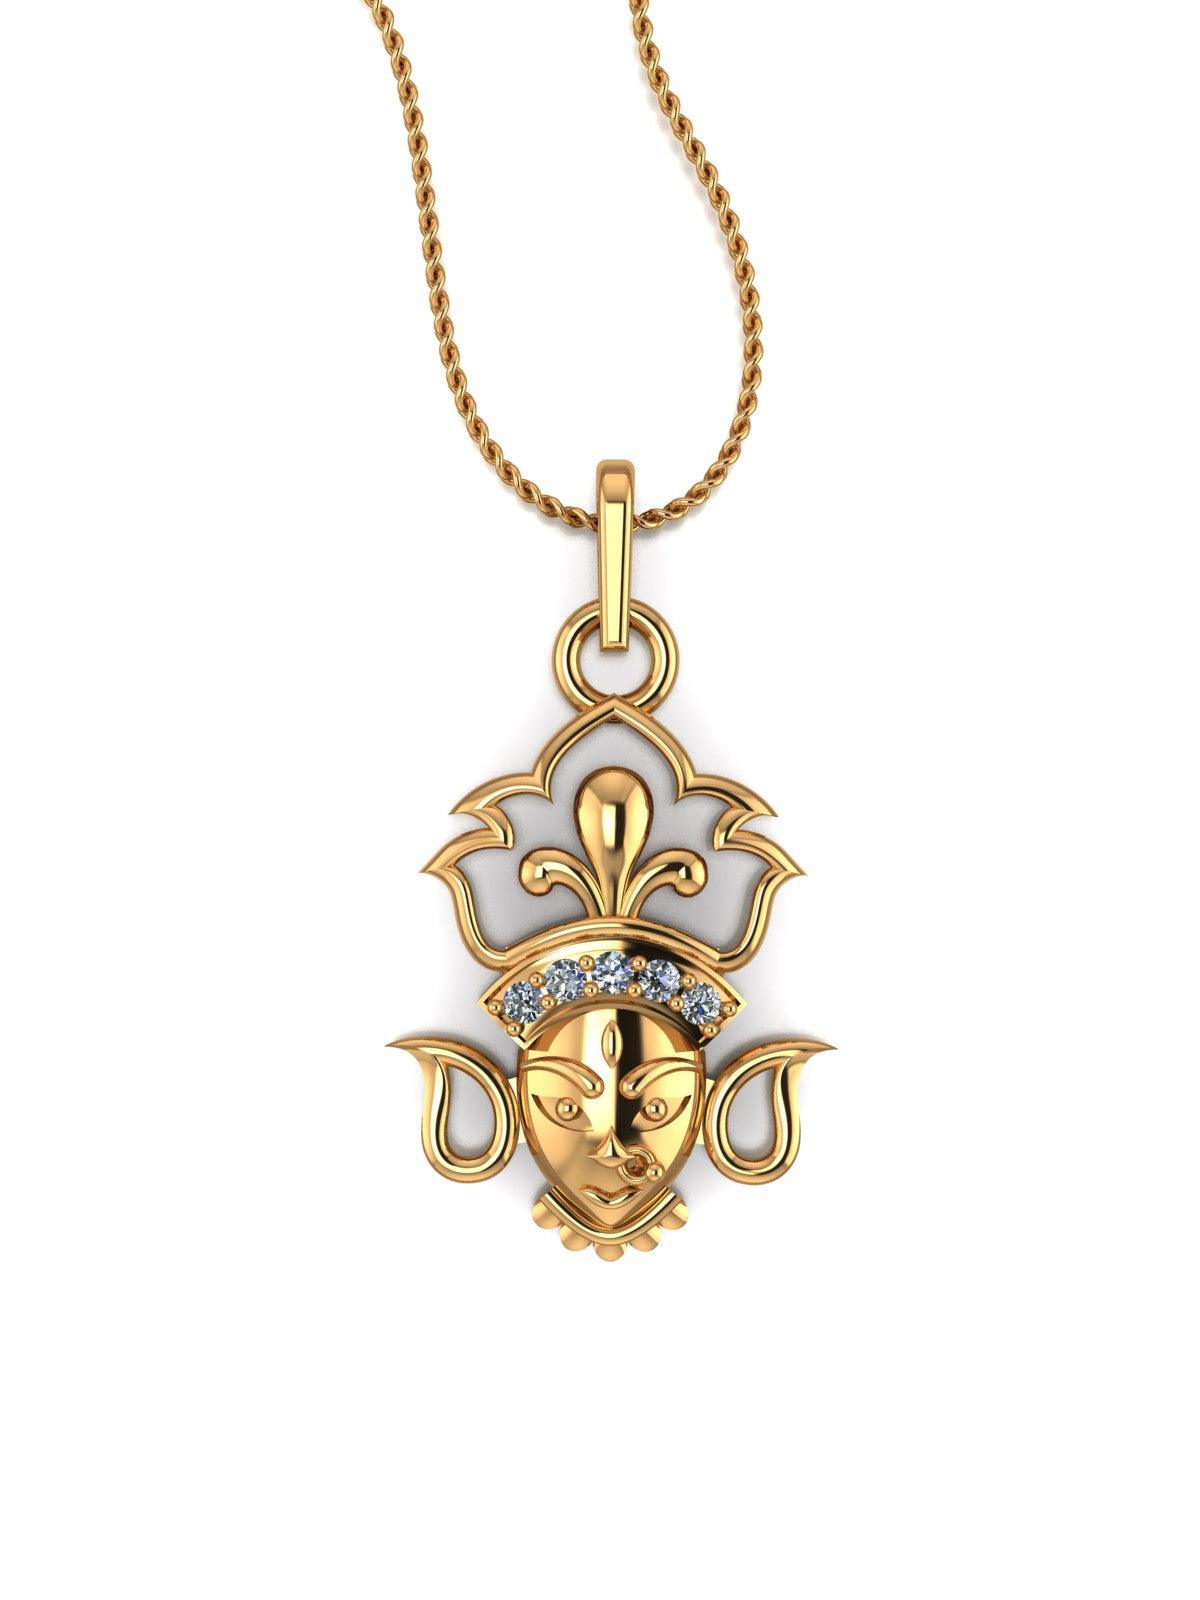 Maa Durga Silver Pendant with chain - Chandrani Pearls